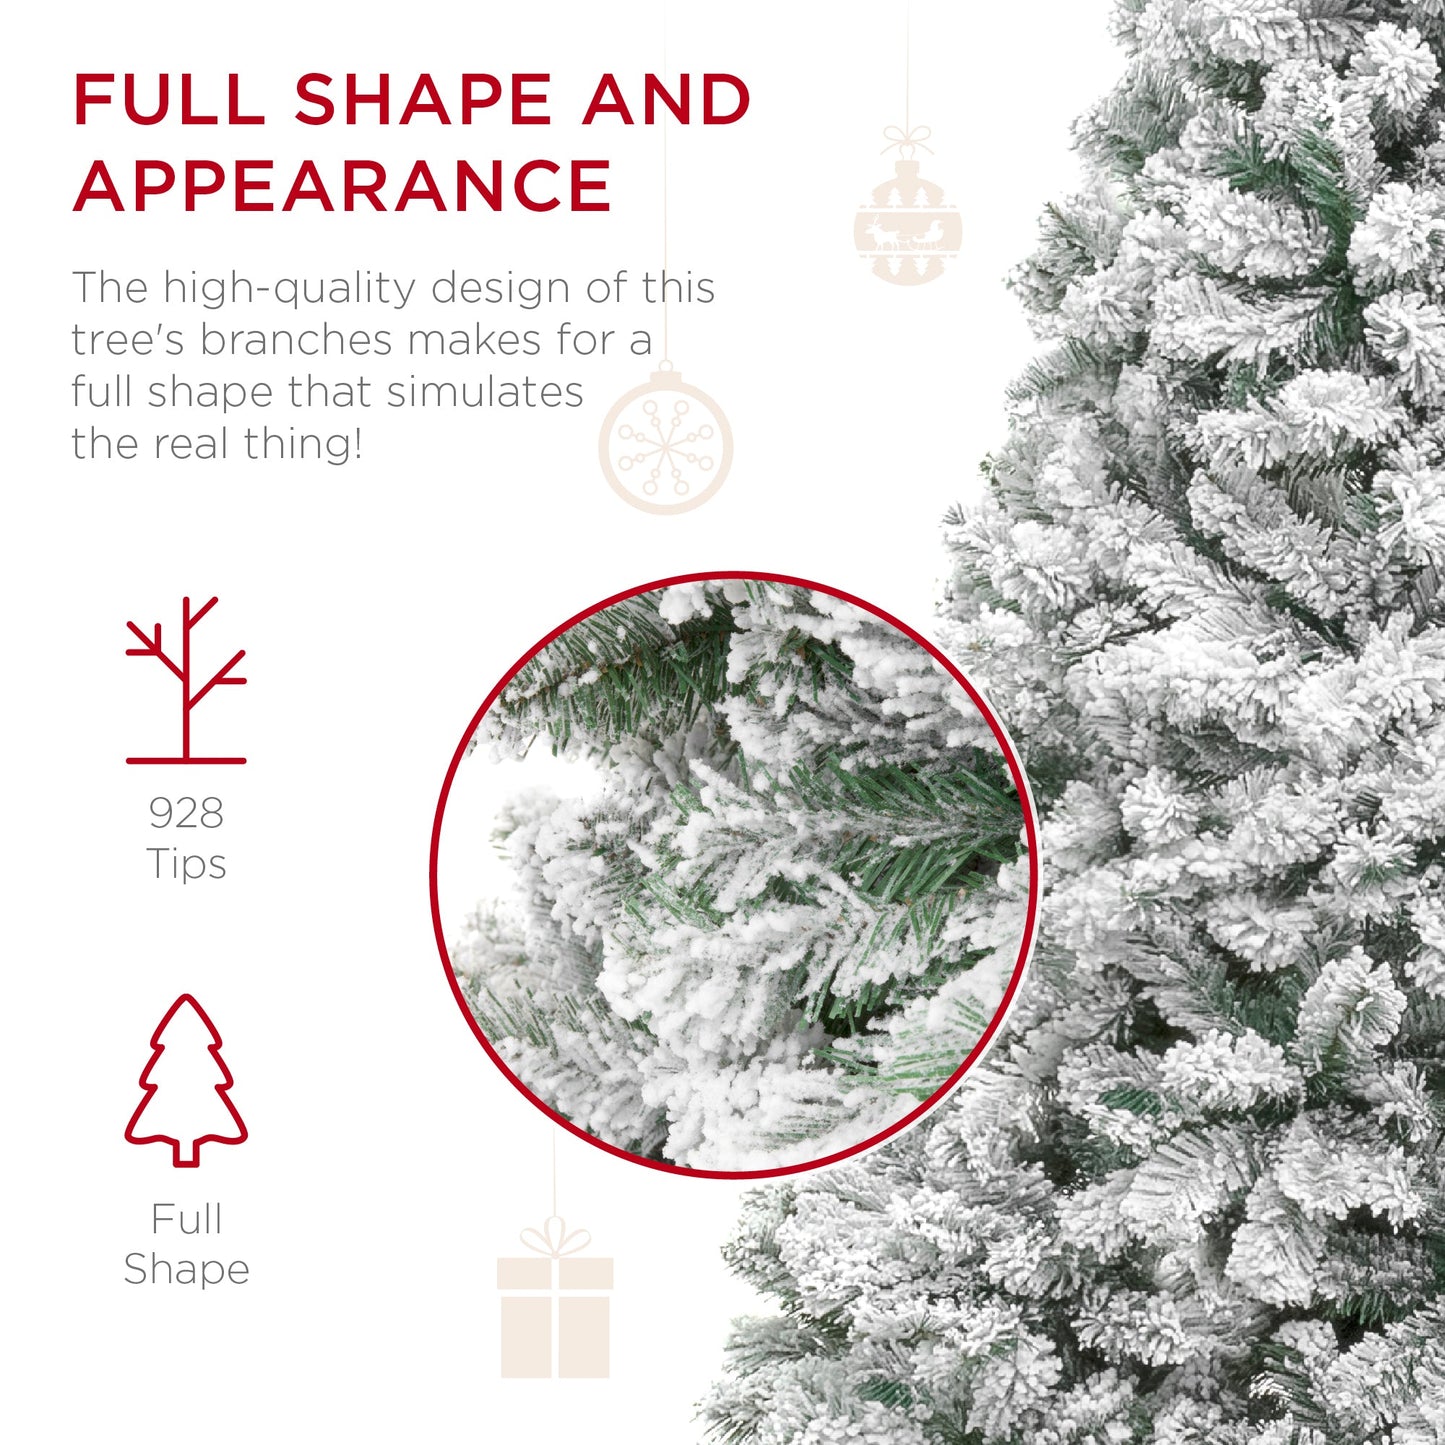 Premium Snow Flocked Artificial Pine Christmas Tree w/ Foldable Metal Base